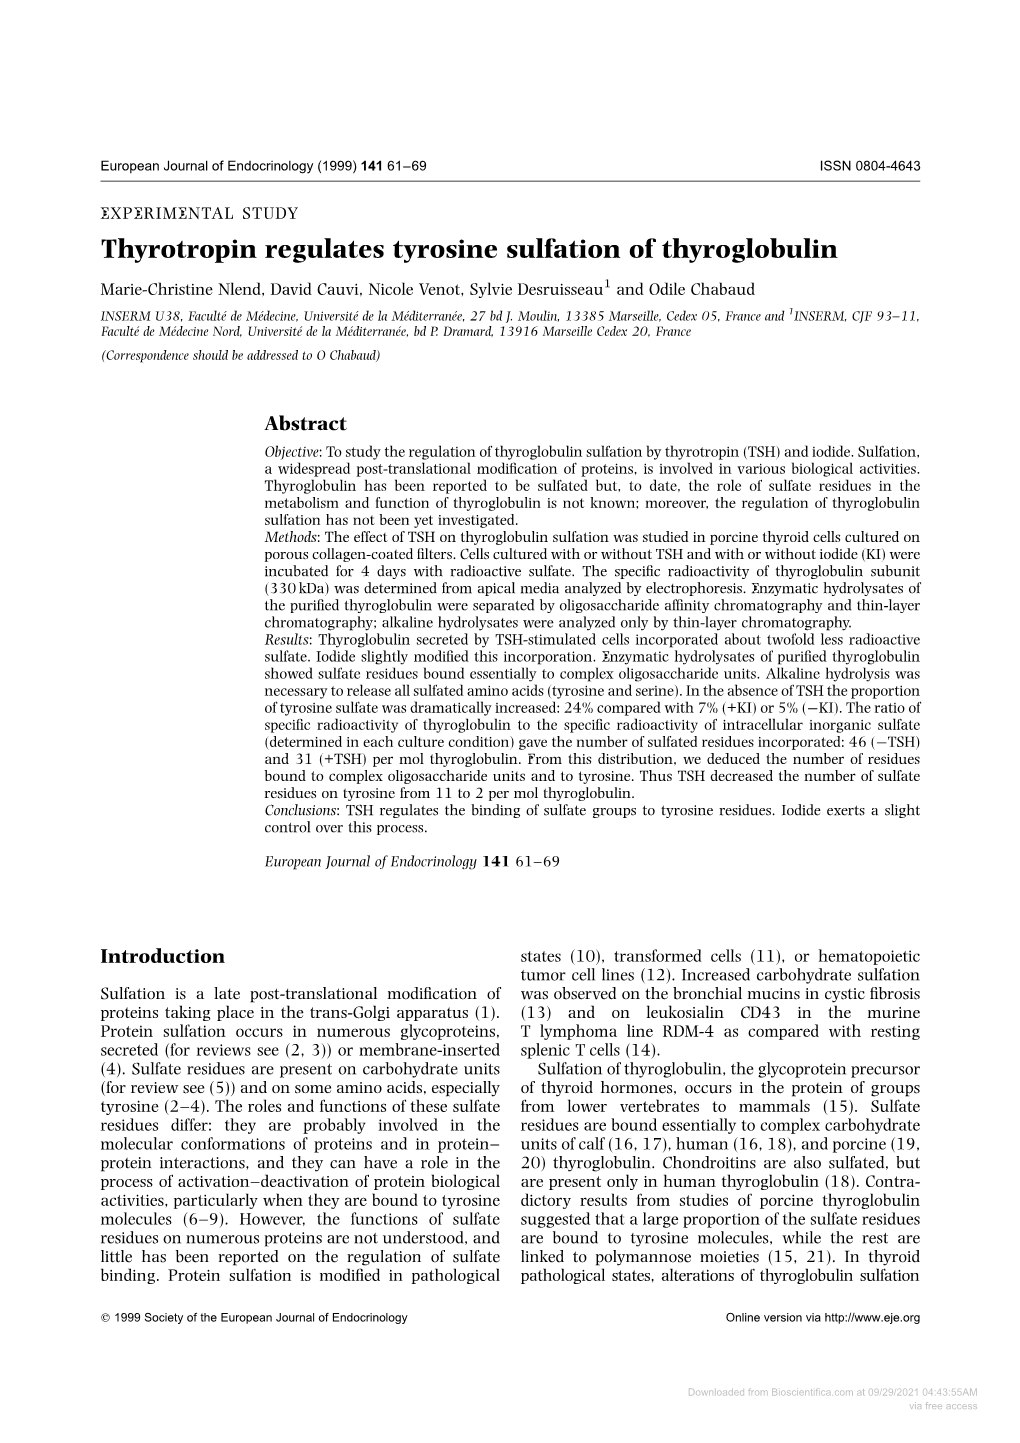 Thyrotropin Regulates Tyrosine Sulfation of Thyroglobulin